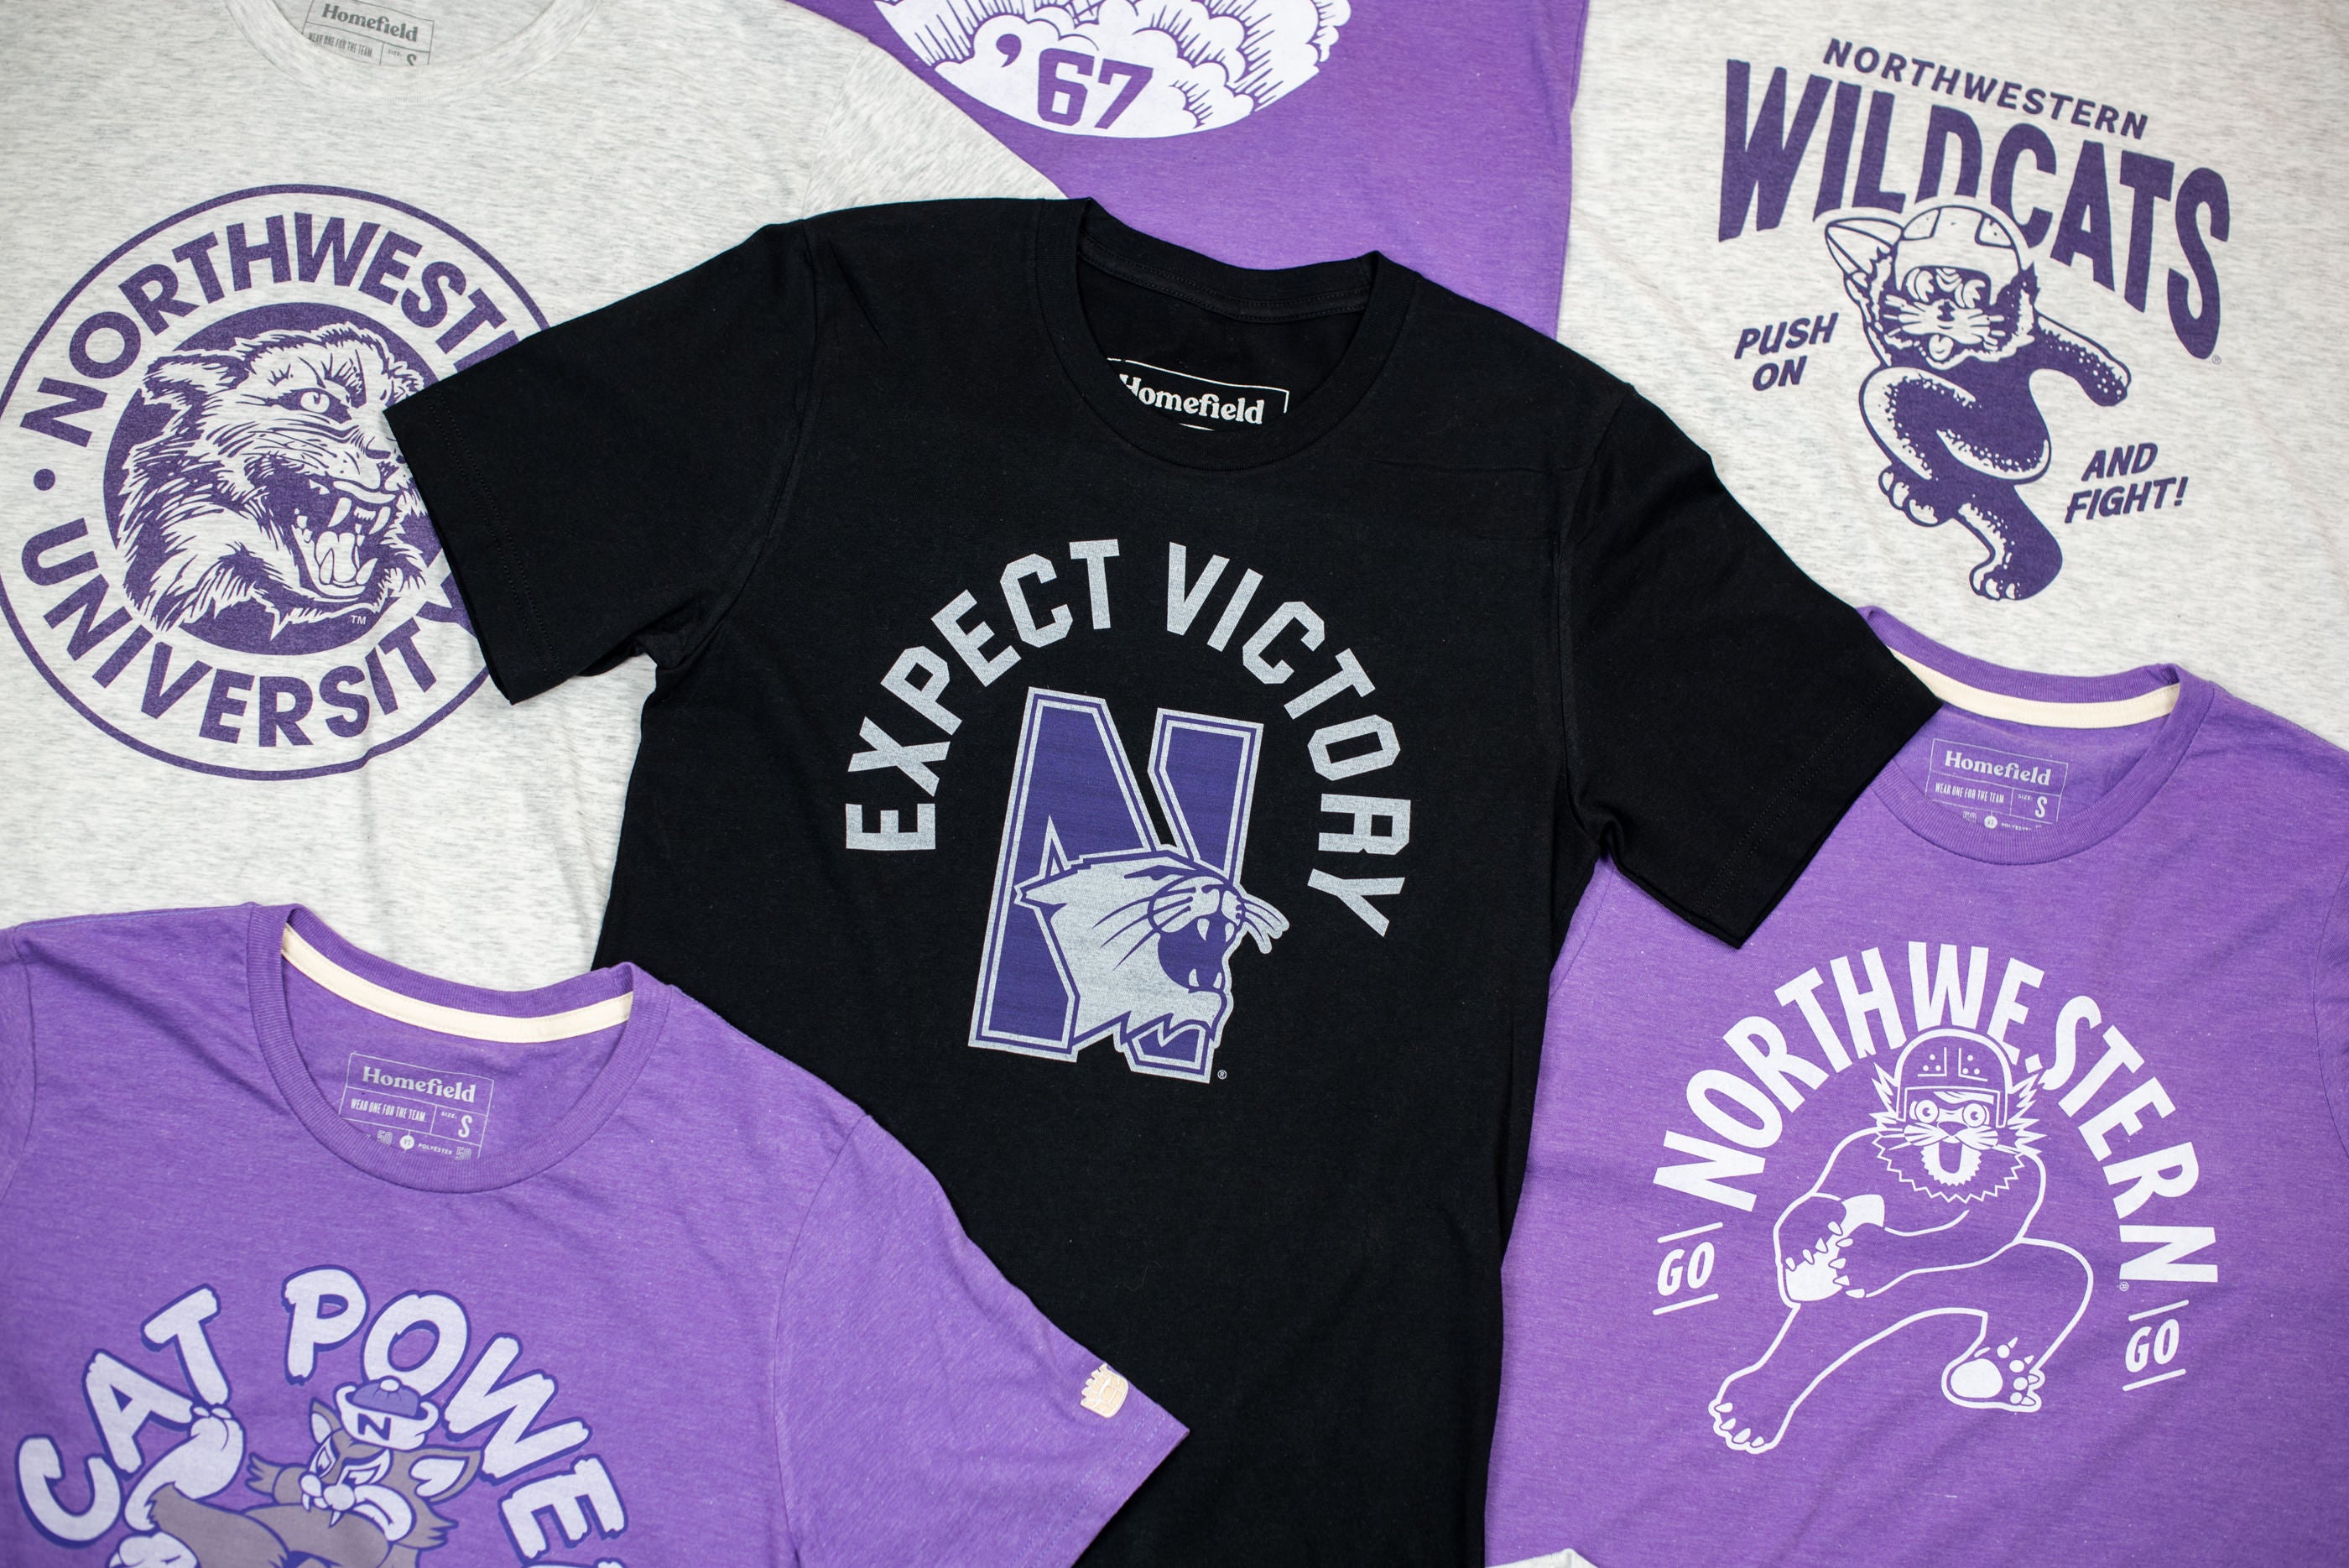 Northwestern University Wildcats Purple Hooded Sweatshirt with Basketball  Design